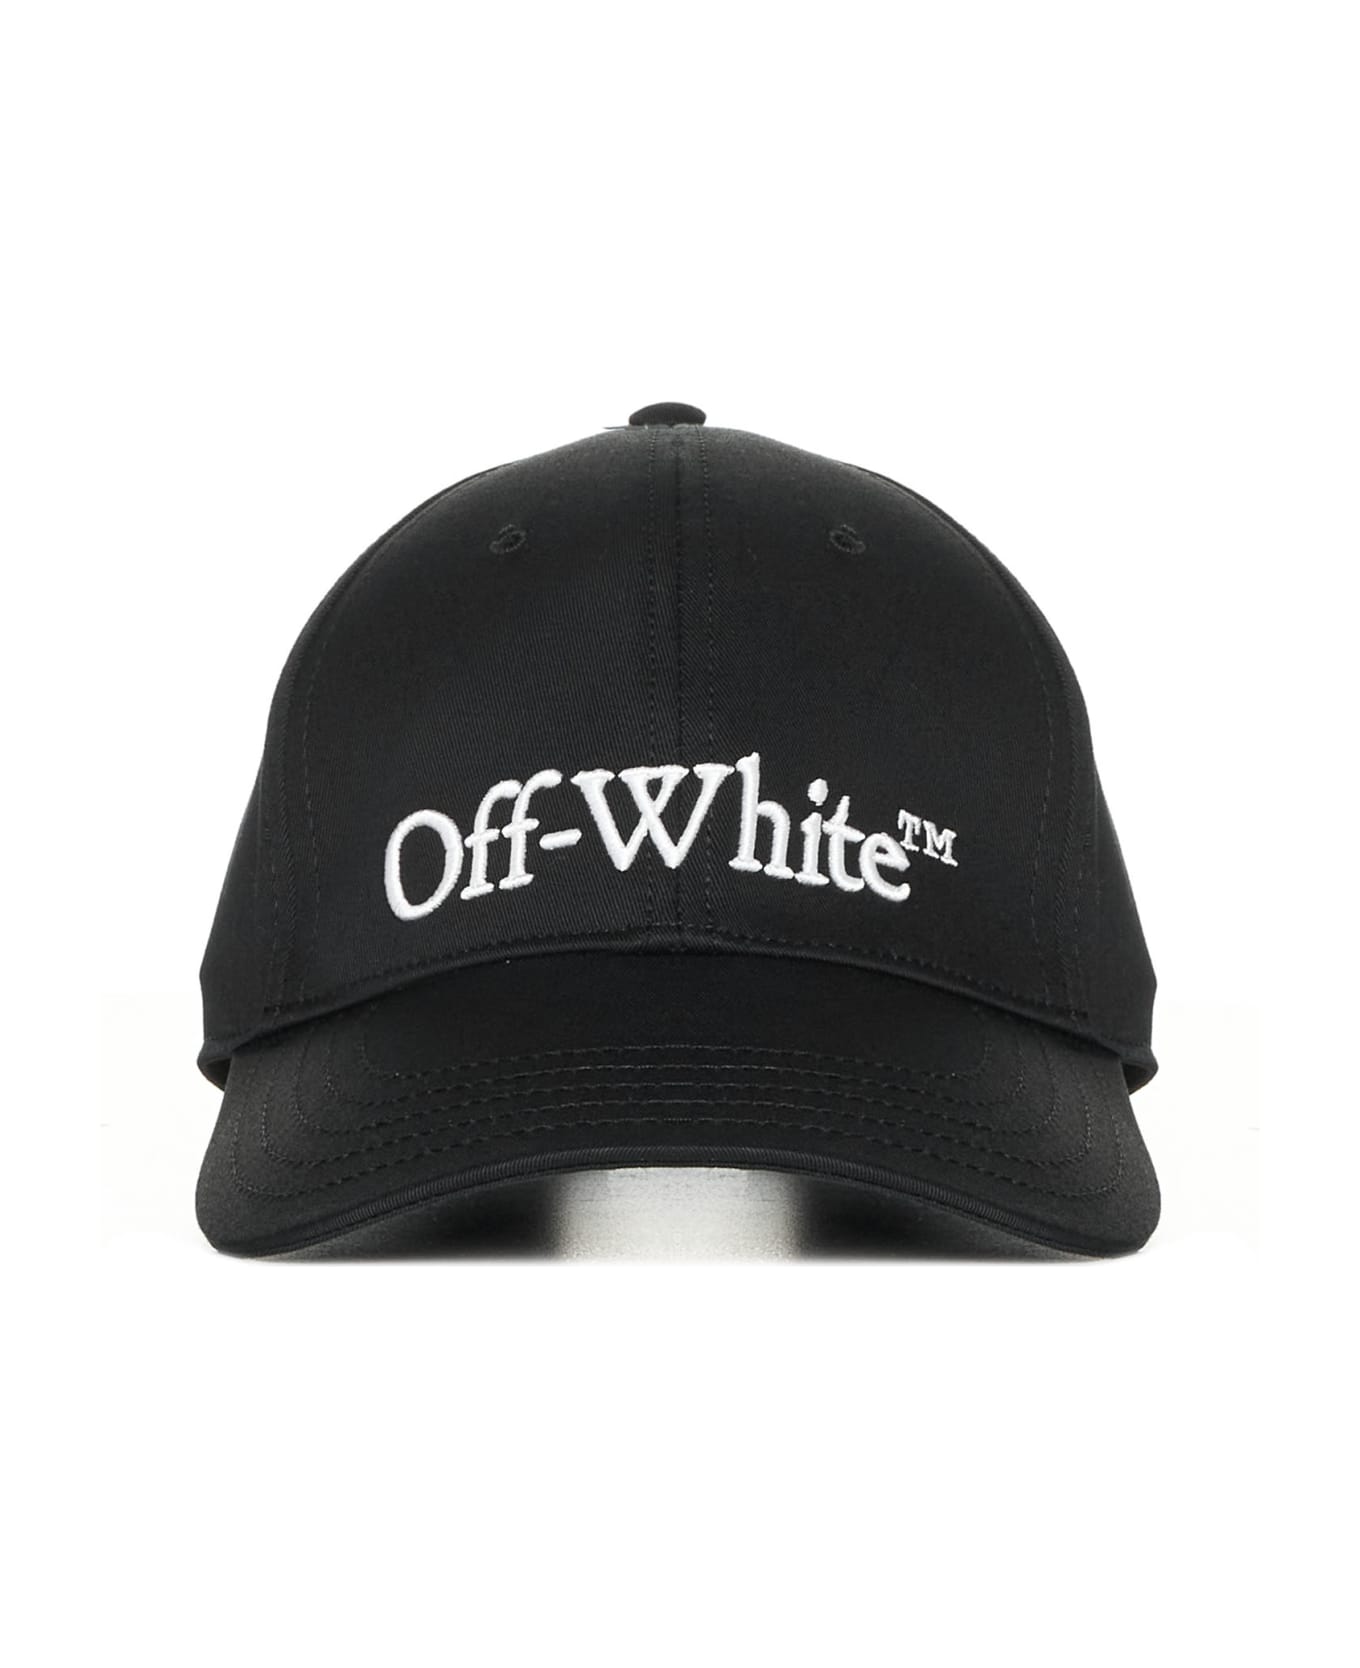 Off-White Hat - Black